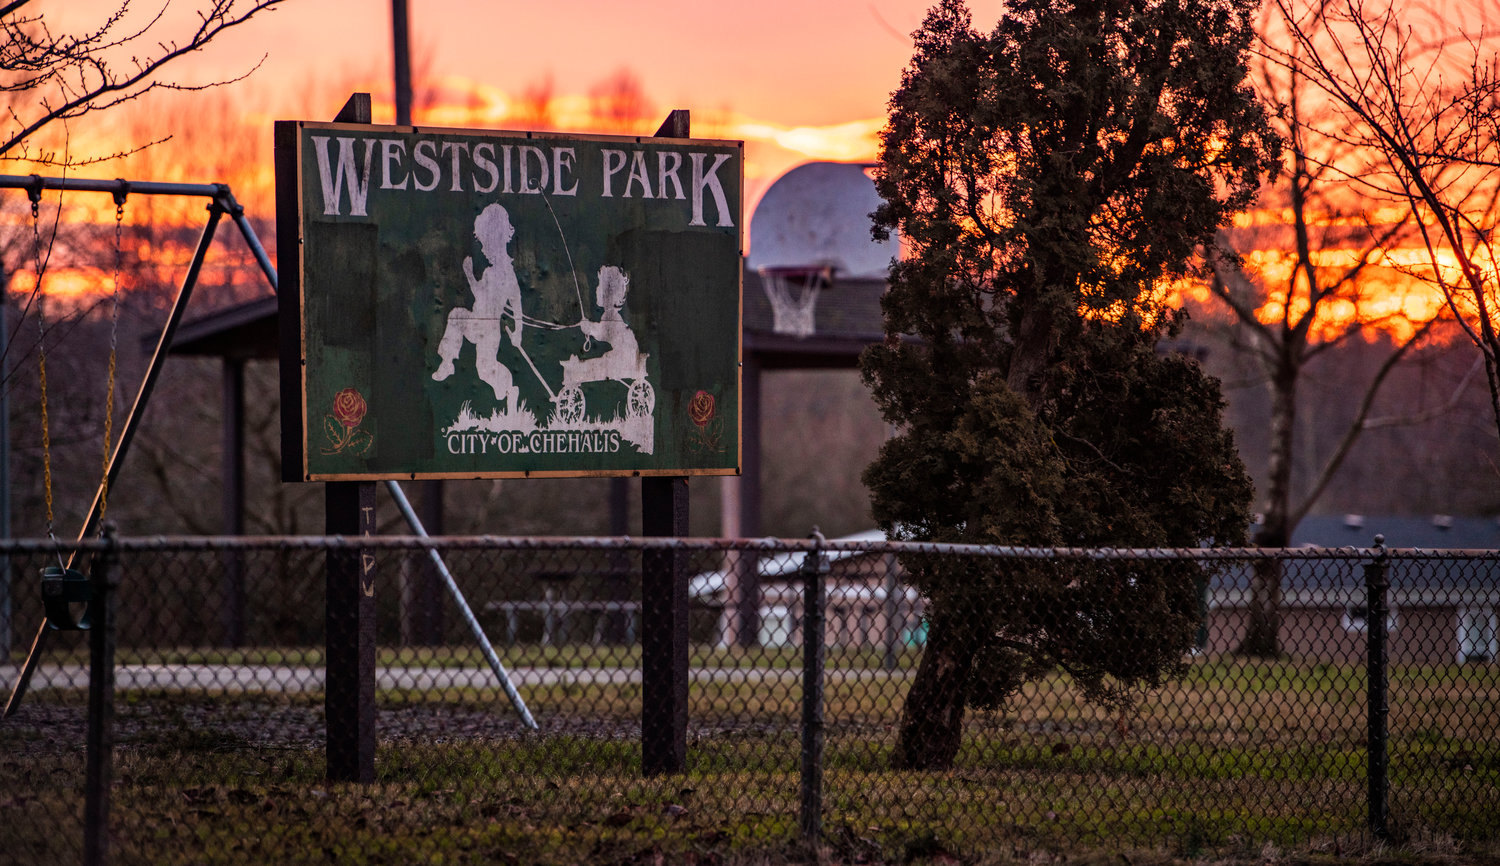 Westside Park is located in the 800 block of Northwest West Street in Chehalis.